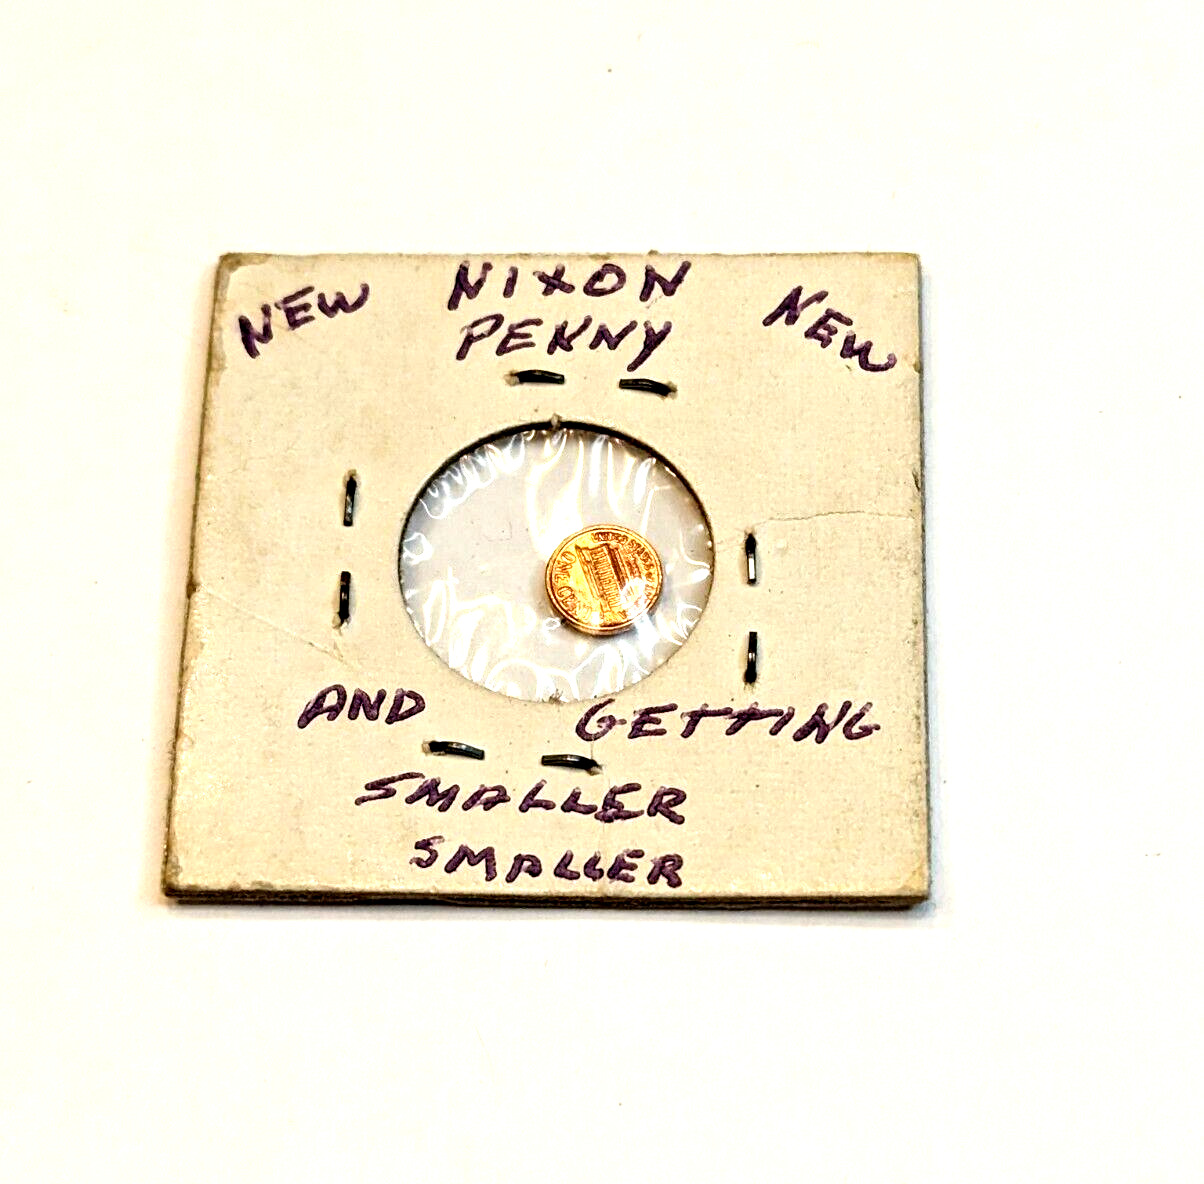 1964 Nixon Penny Getting Smaller & Smaller Political Satire Coin Medallion Piece